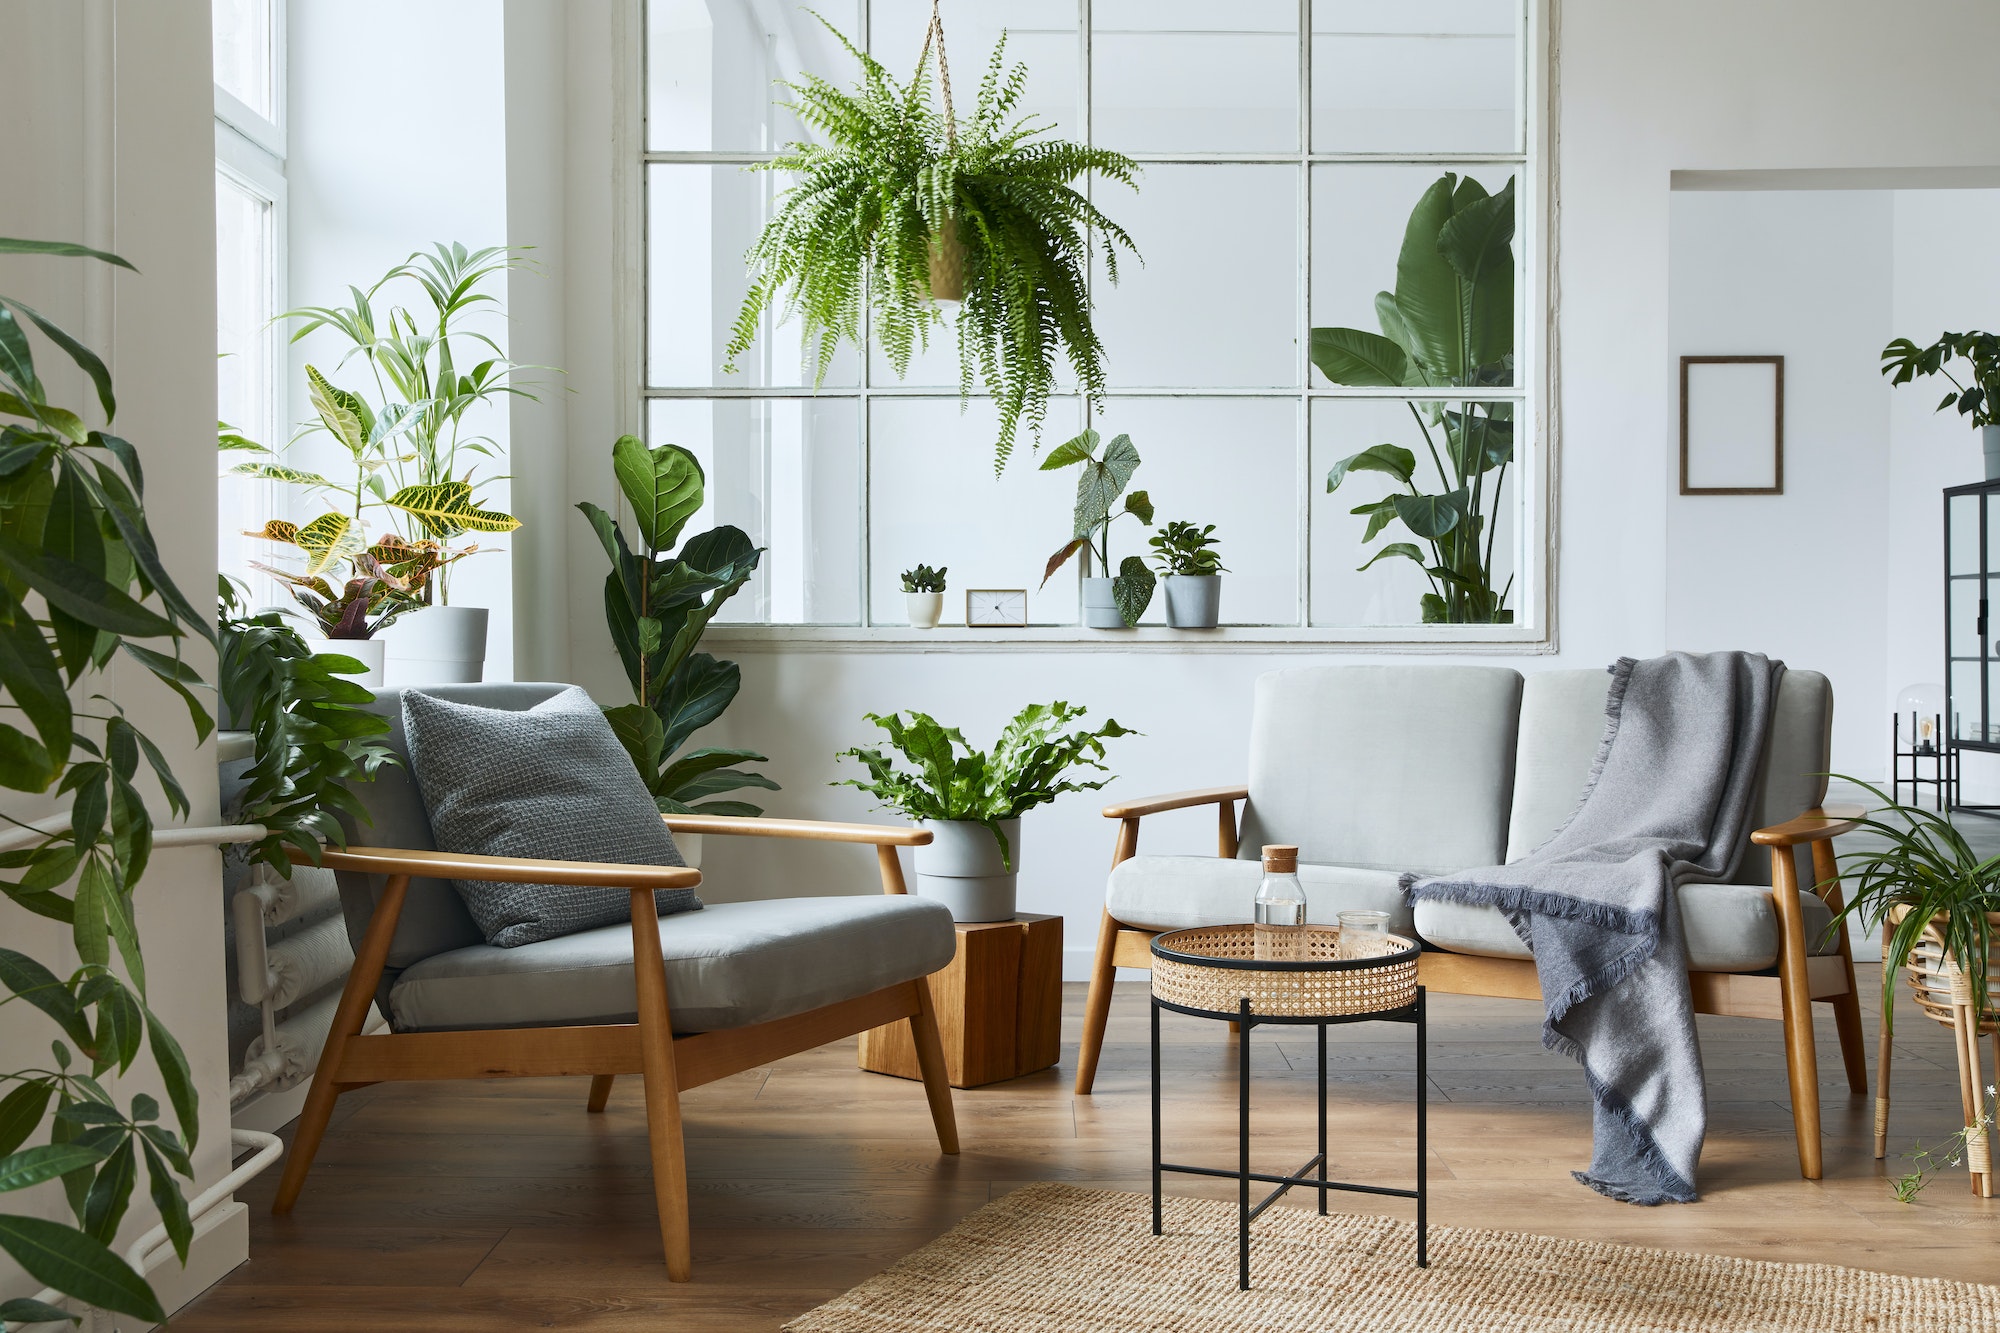 Modern scandinavian interior of living room